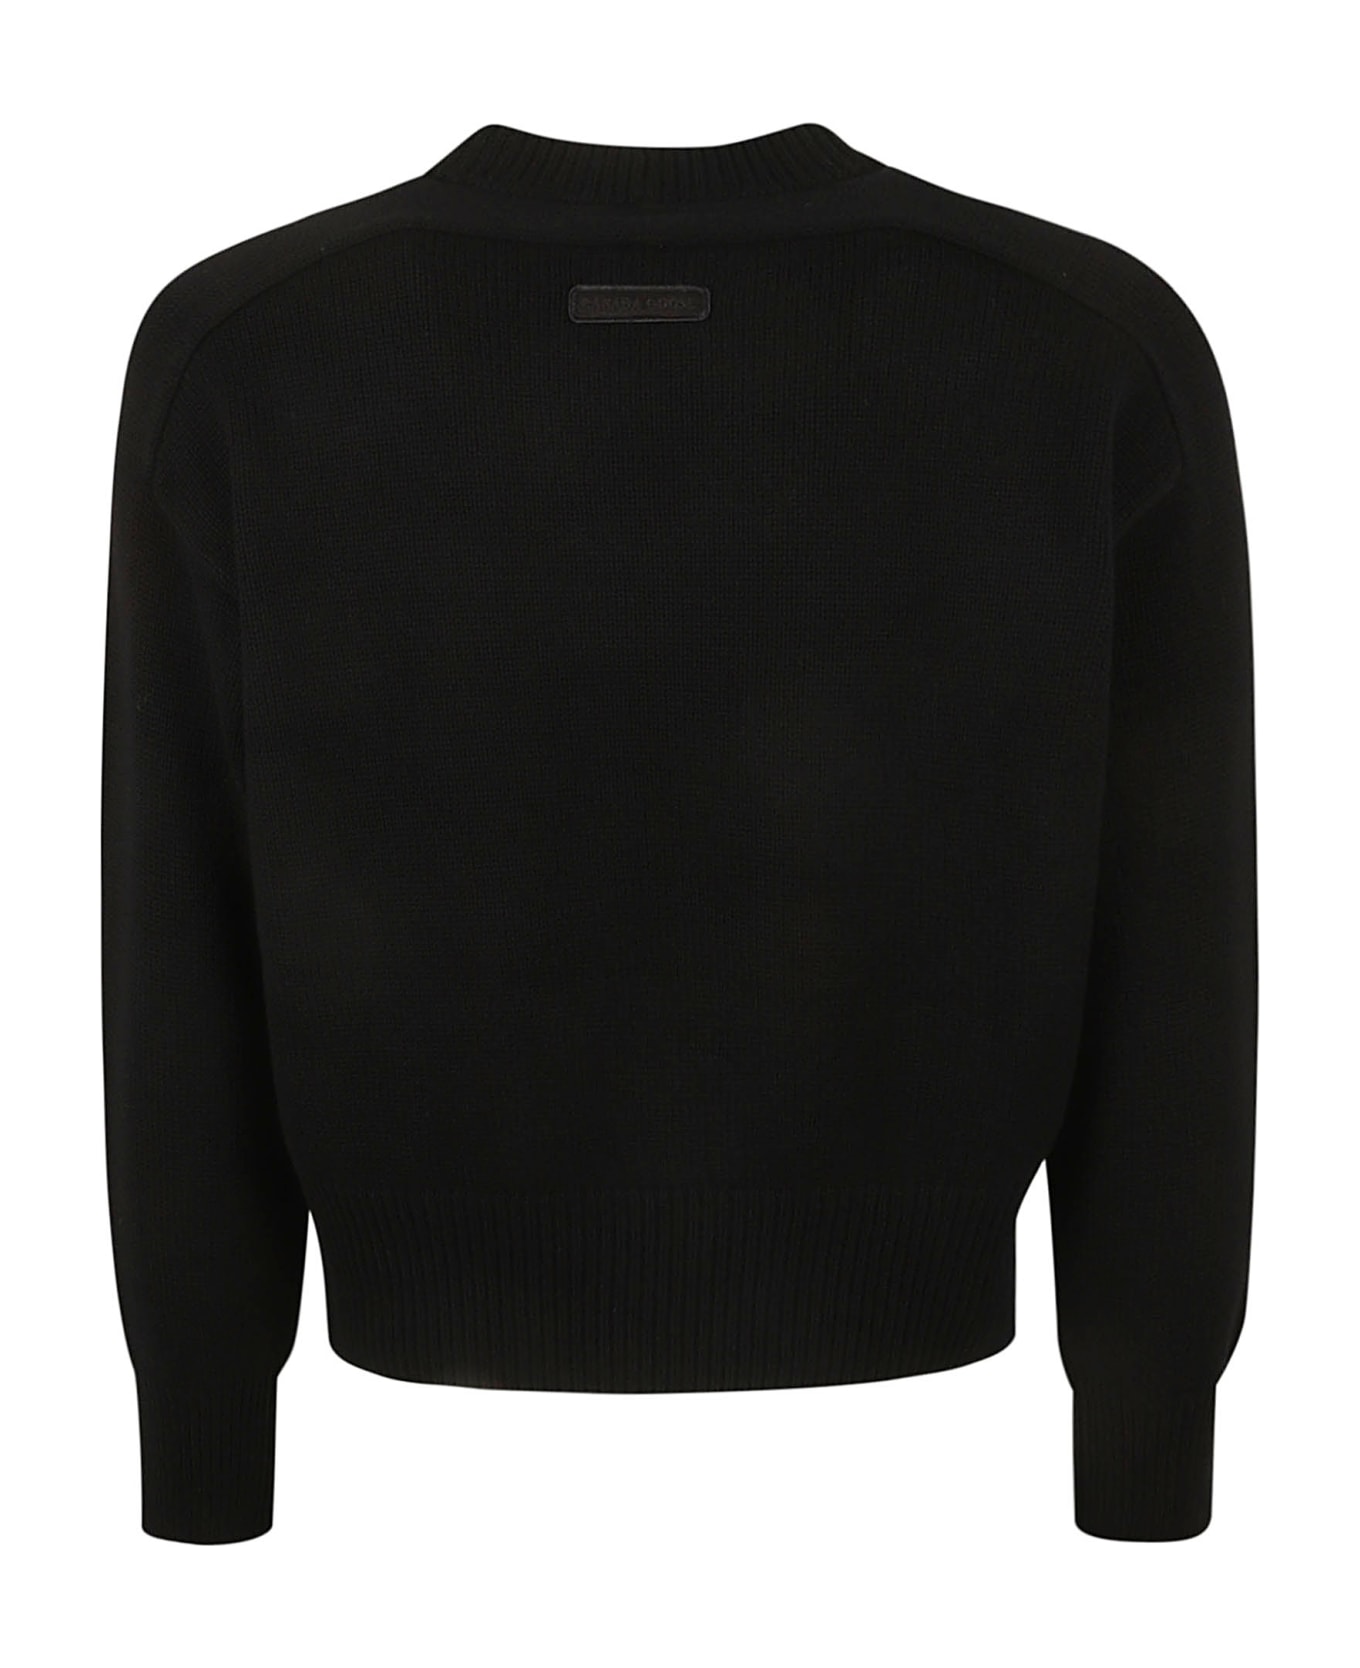 Canada Goose Round Neck Sweater - Black